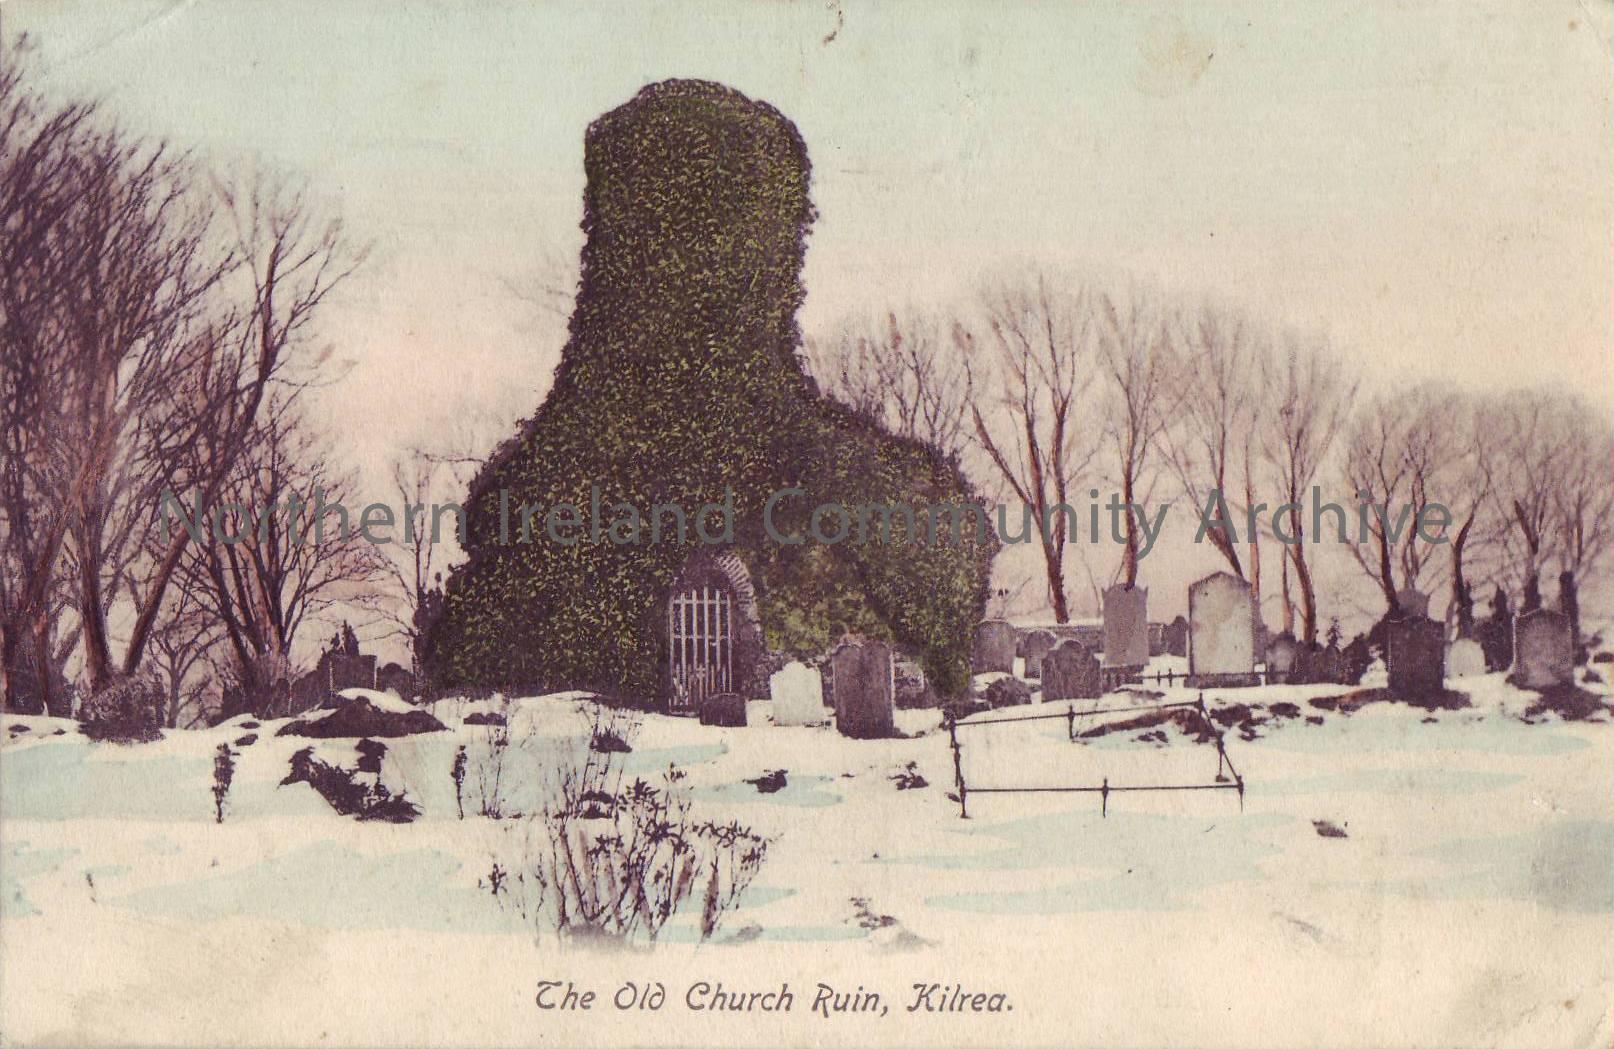 Postcard of ‘The Old Church Ruin, Kilrea’